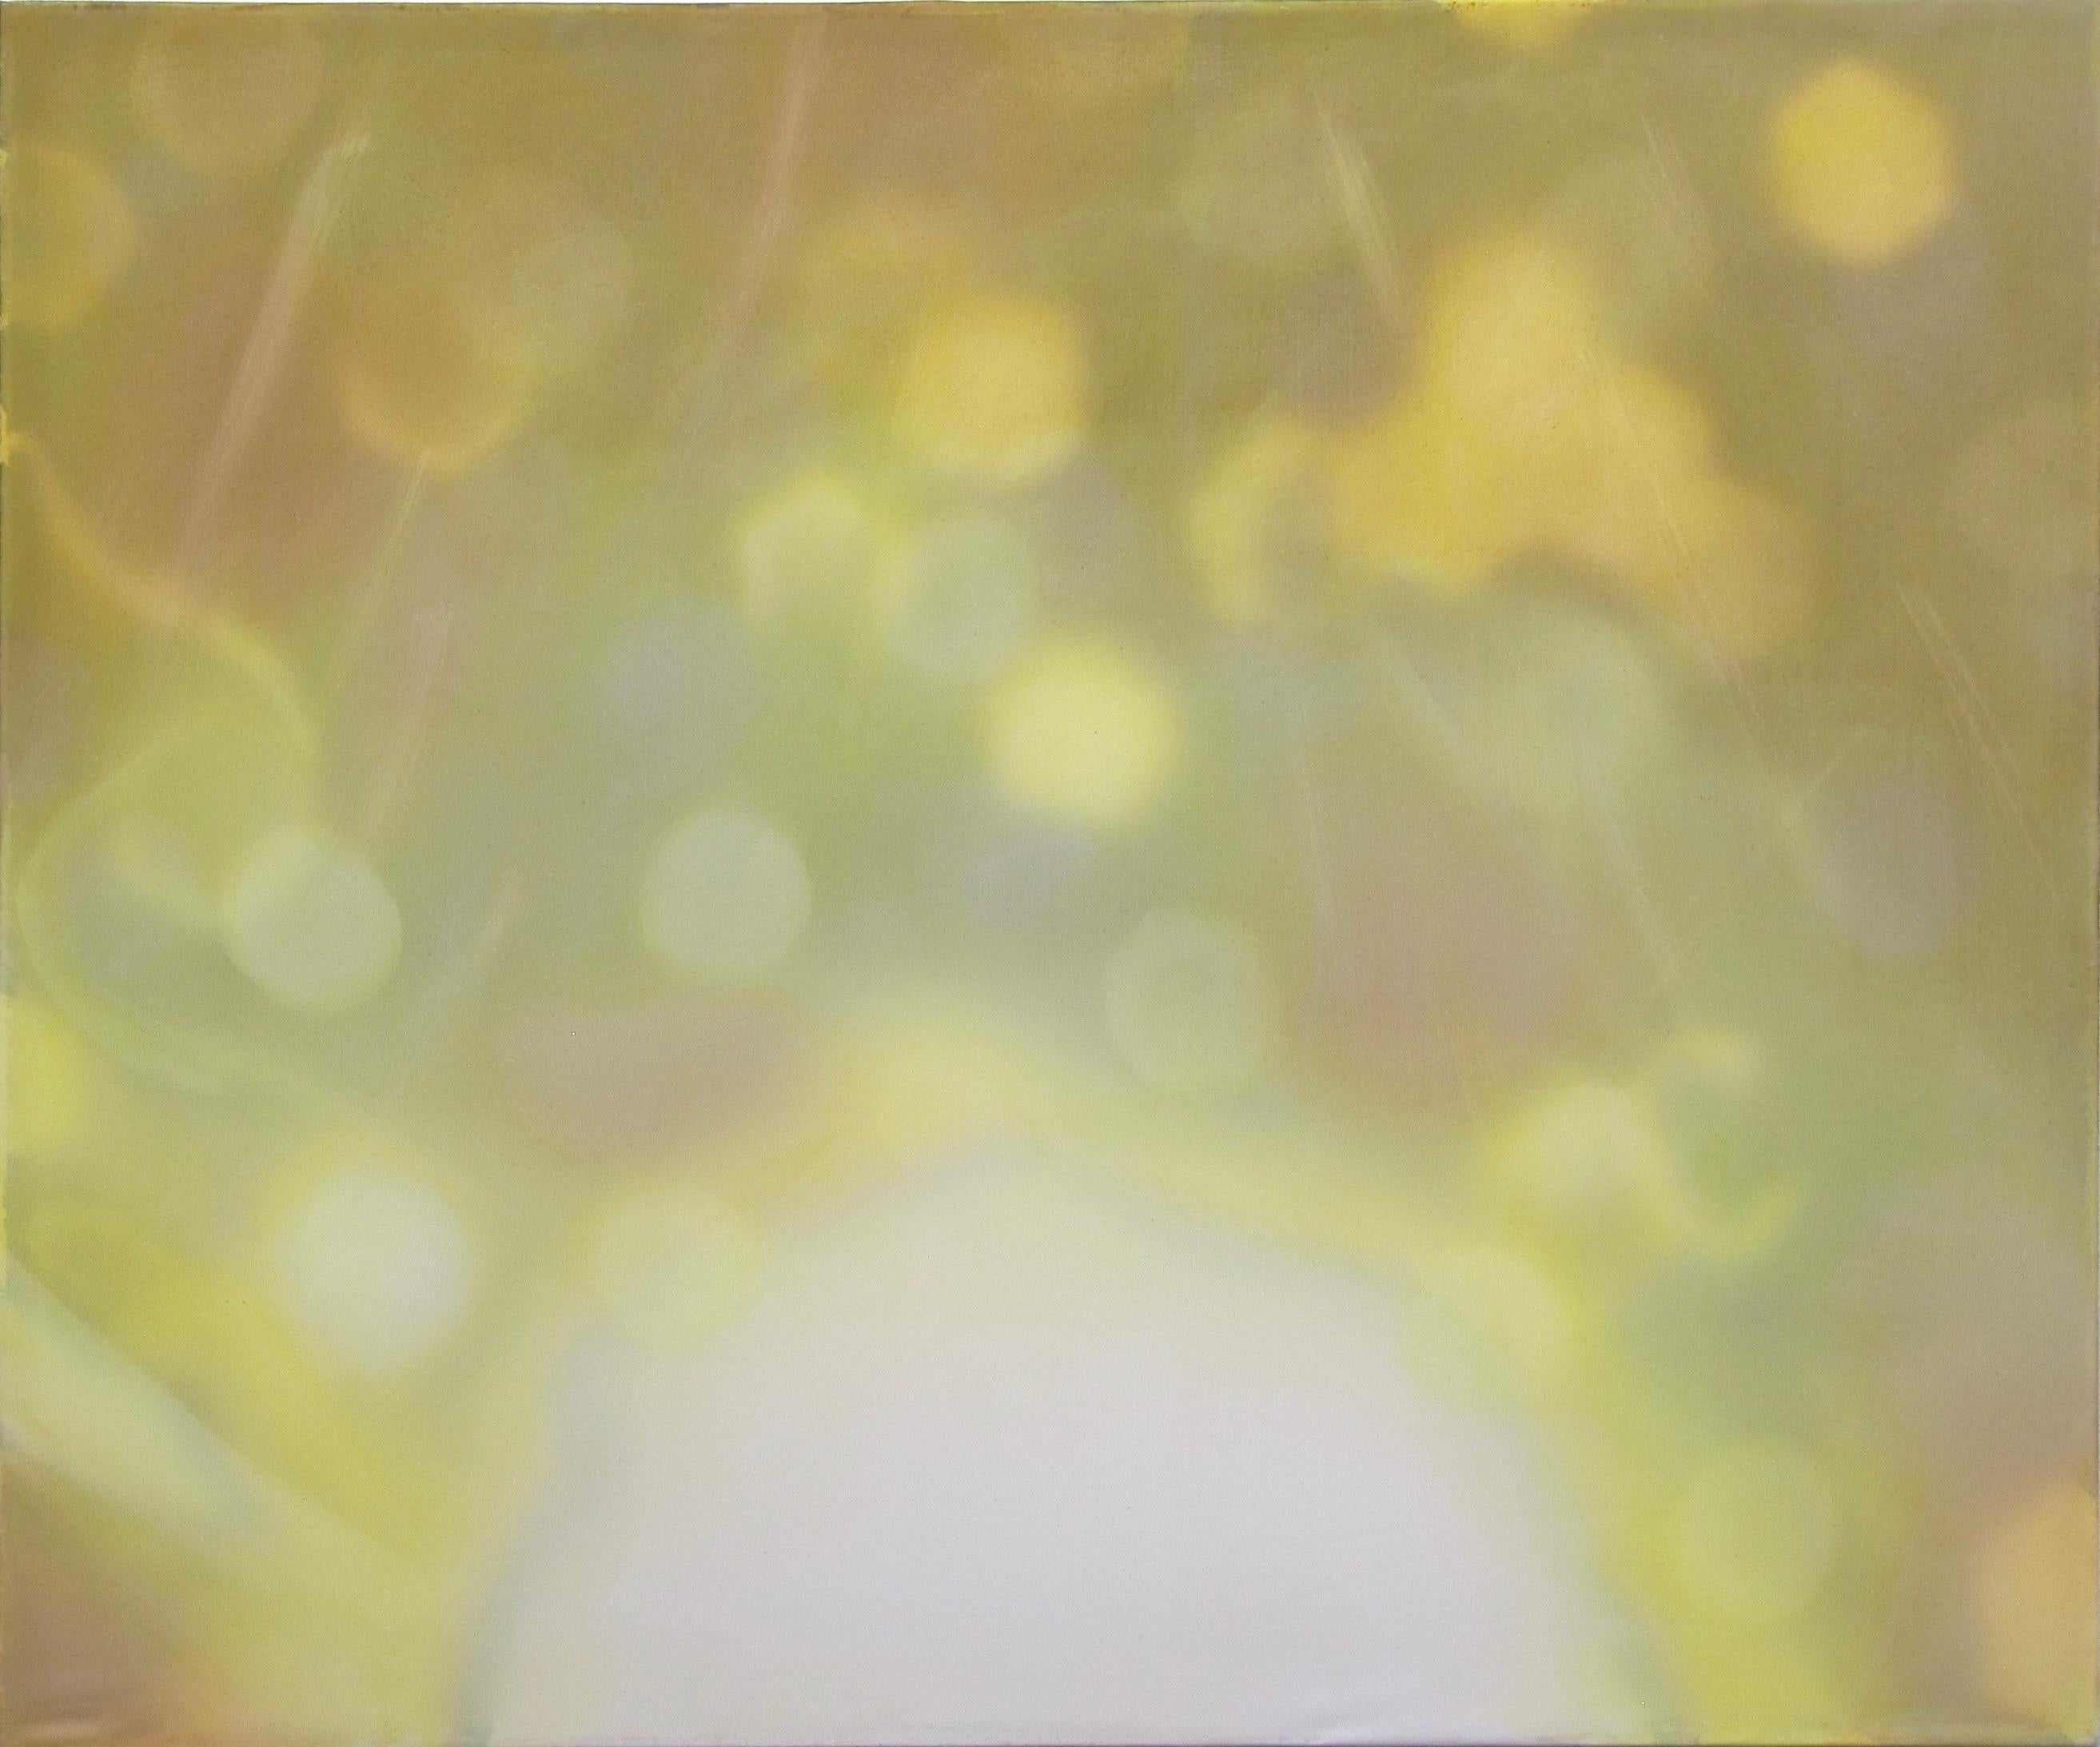 Rising Burst - Contemporary Abstract Mixed Media Painting, yellow burst of light